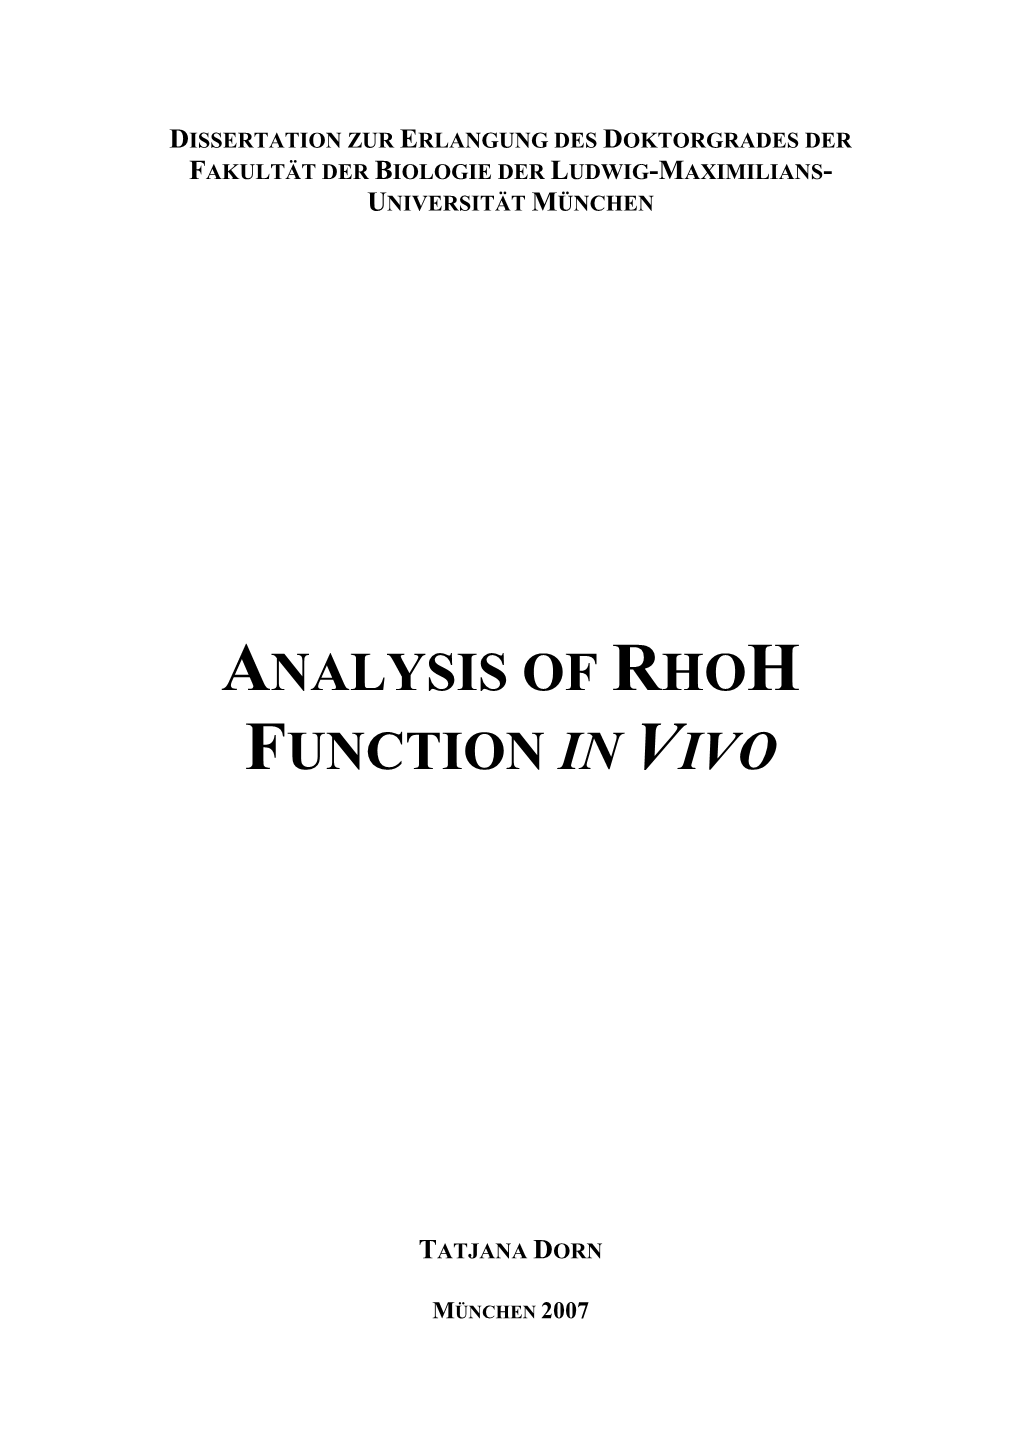 Analysis of Rhoh Function in Vivo